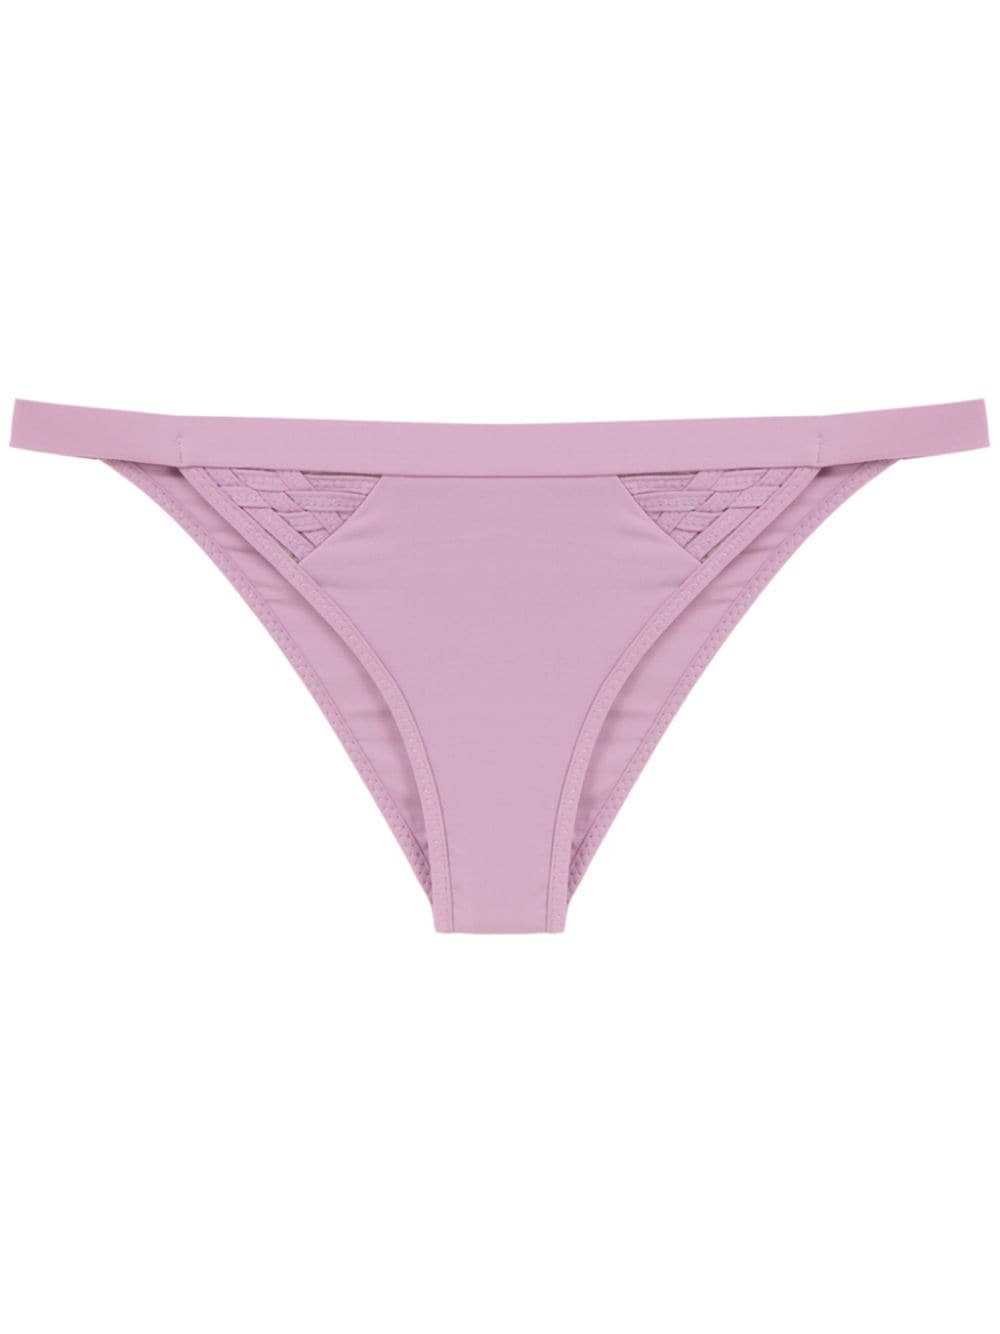 Clube Bossa Eames bikini bottom - Pink von Clube Bossa